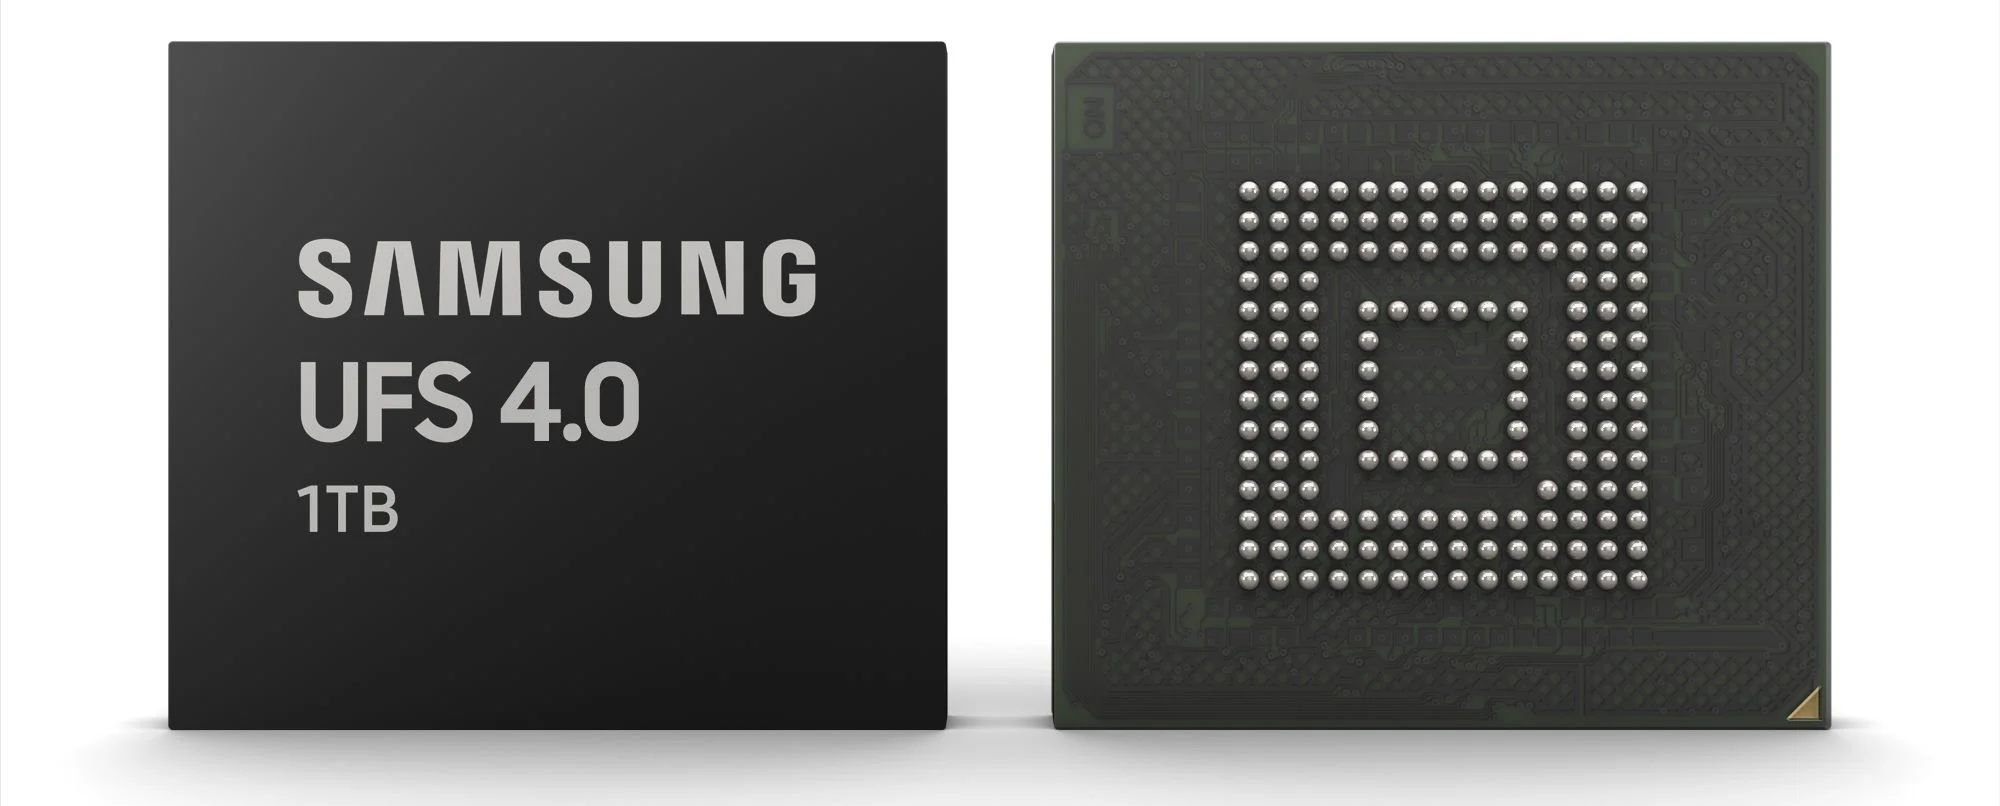 Samsung UFS 4.0 memory